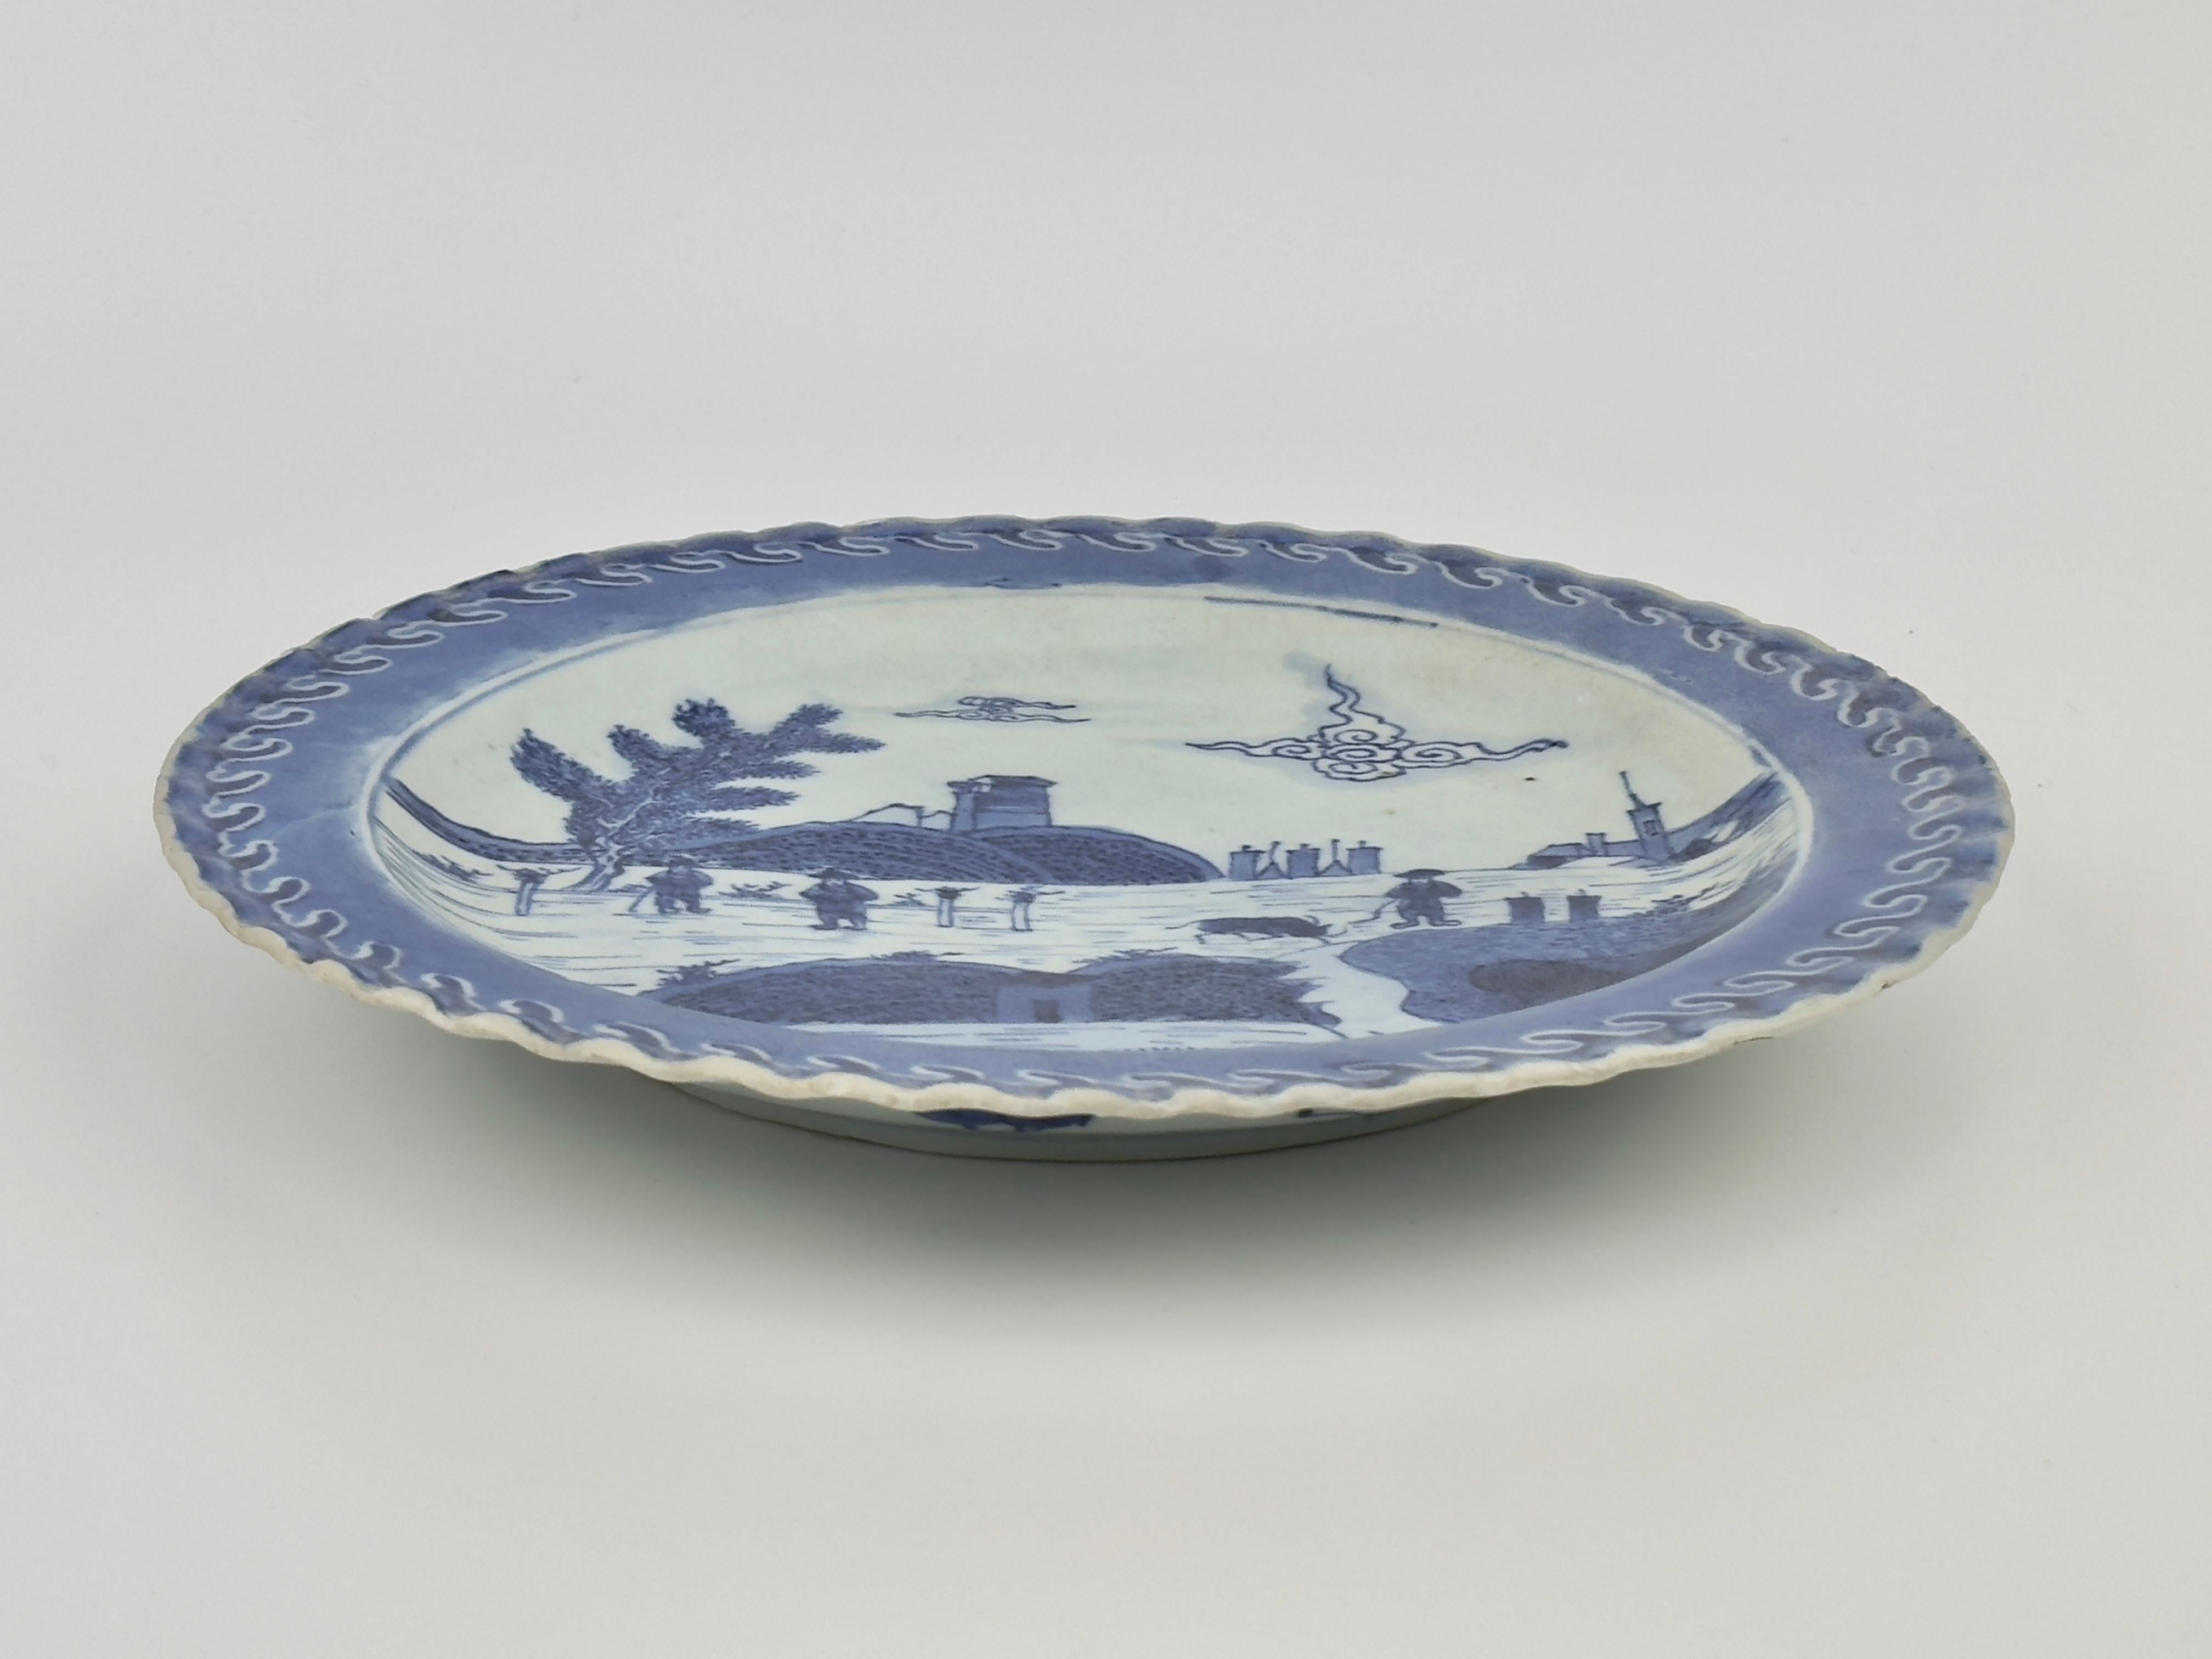 Chinoiserie  'Deshima Island' Pattern Blue and White dish c1725, Qing Dynasty, Yongzheng Era For Sale